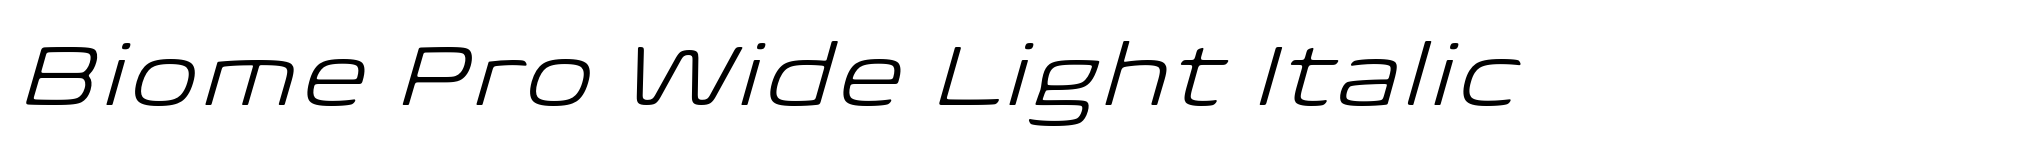 Biome Pro Wide Light Italic image